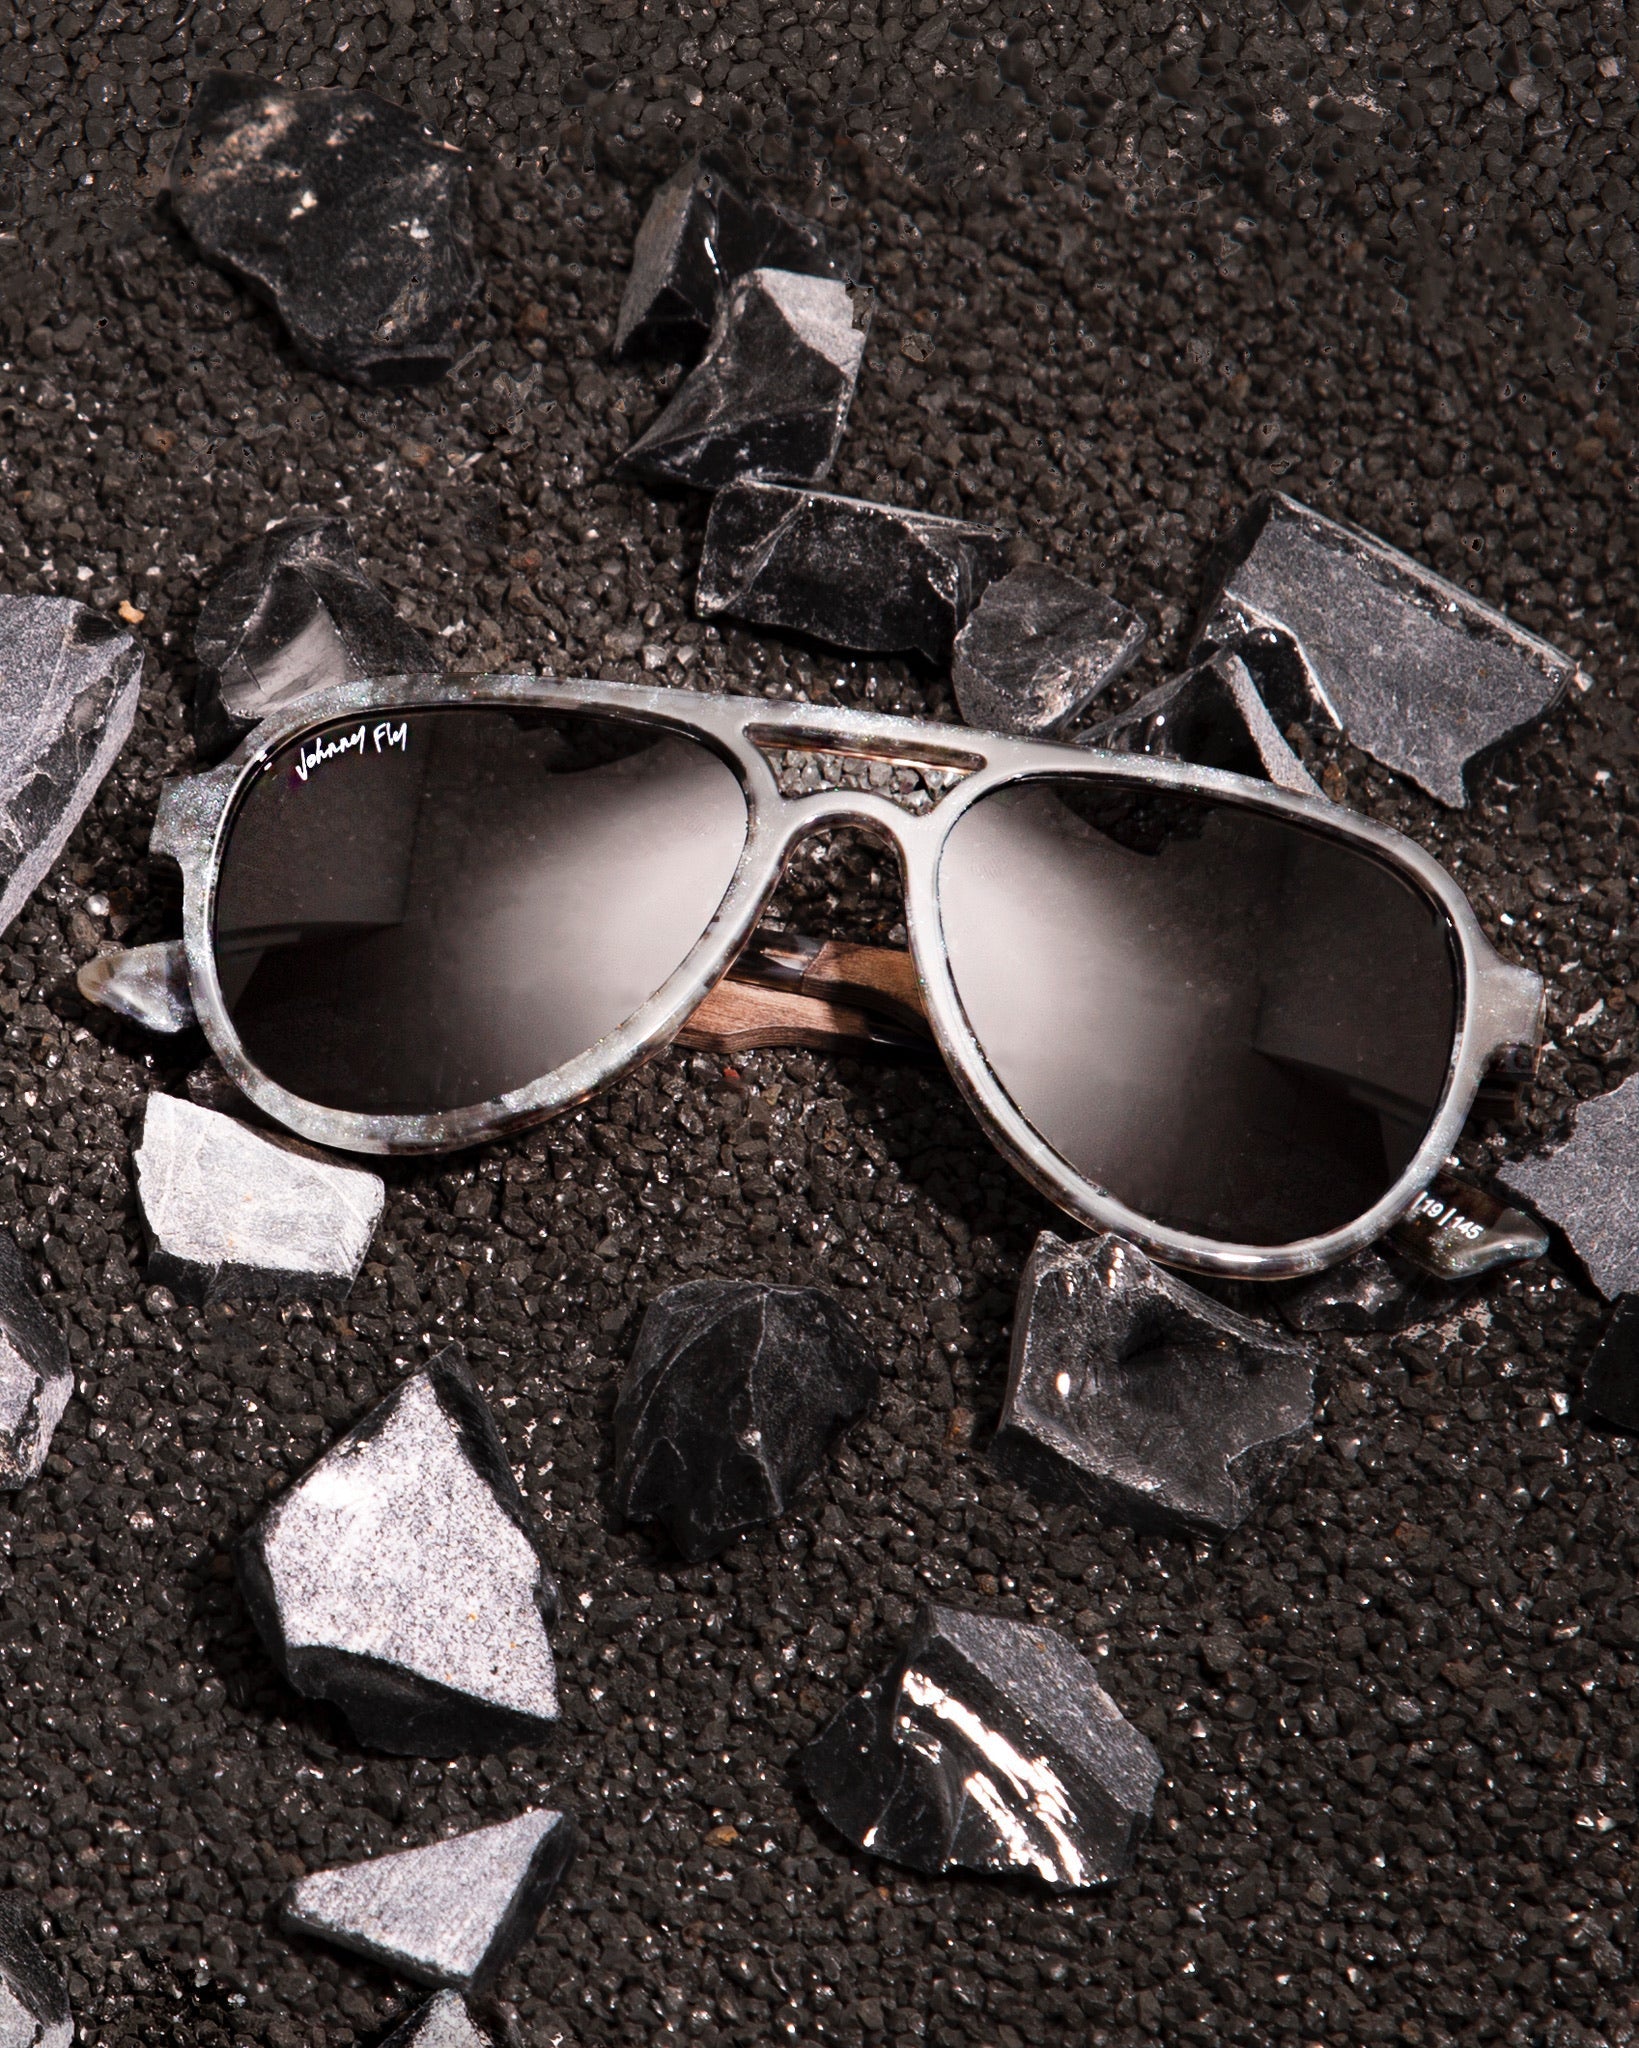 Louis Vuitton LV Signature Round Sunglasses - Size S Black Acetate & Metal. Size U